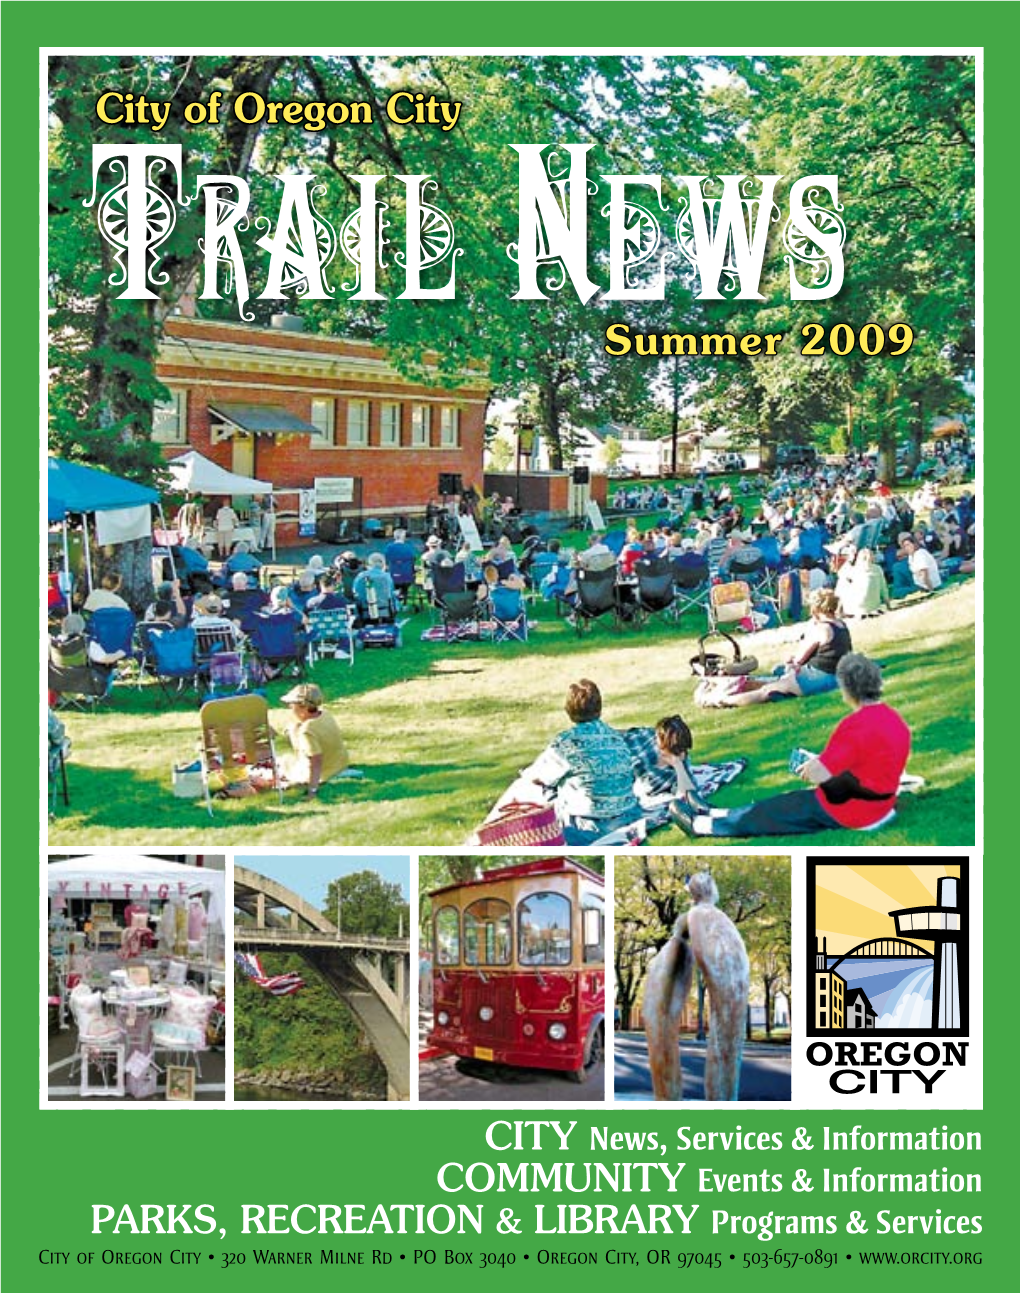 Trail News Summer 2009